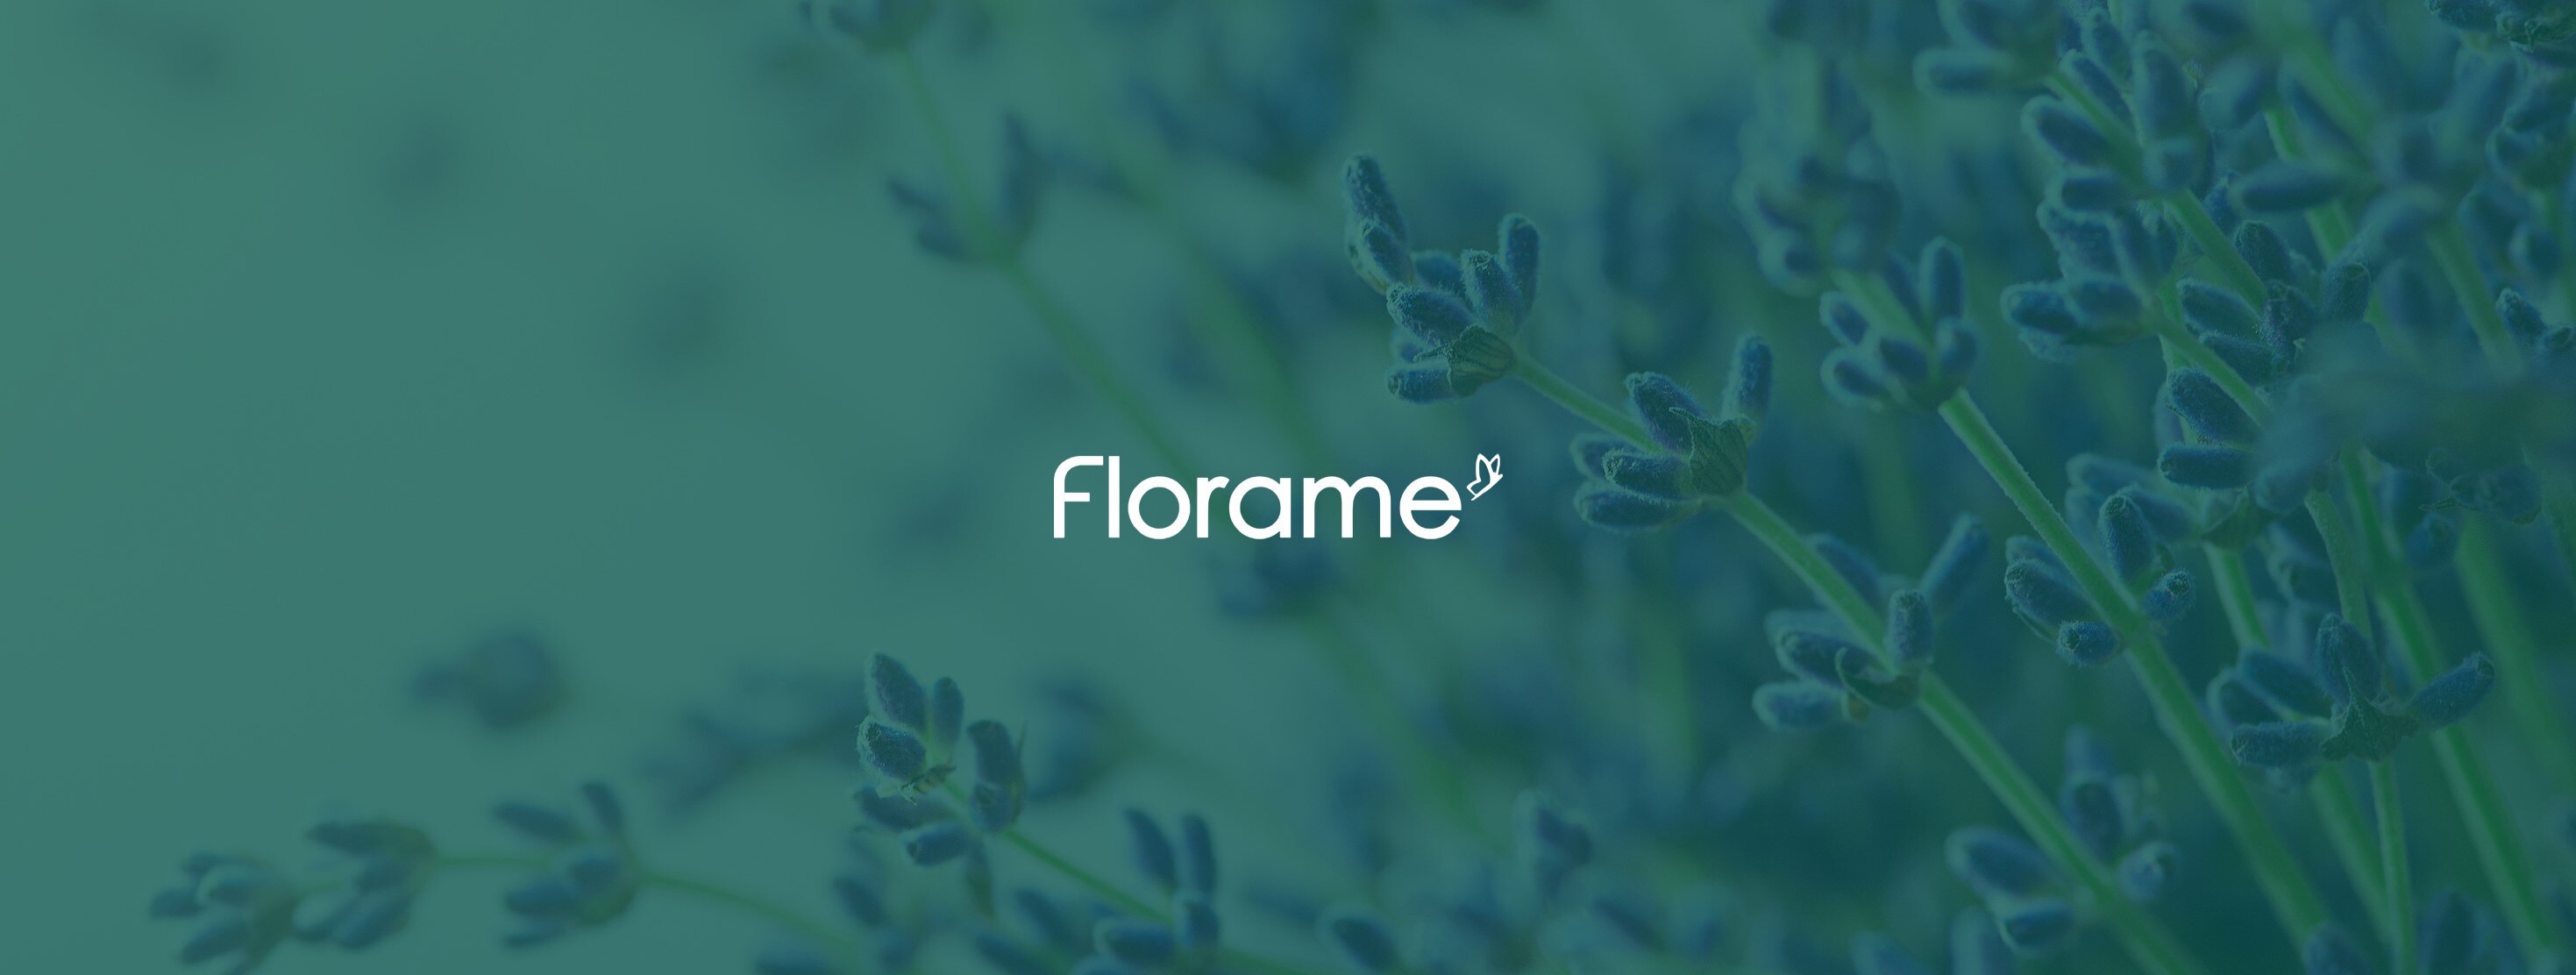 Florame